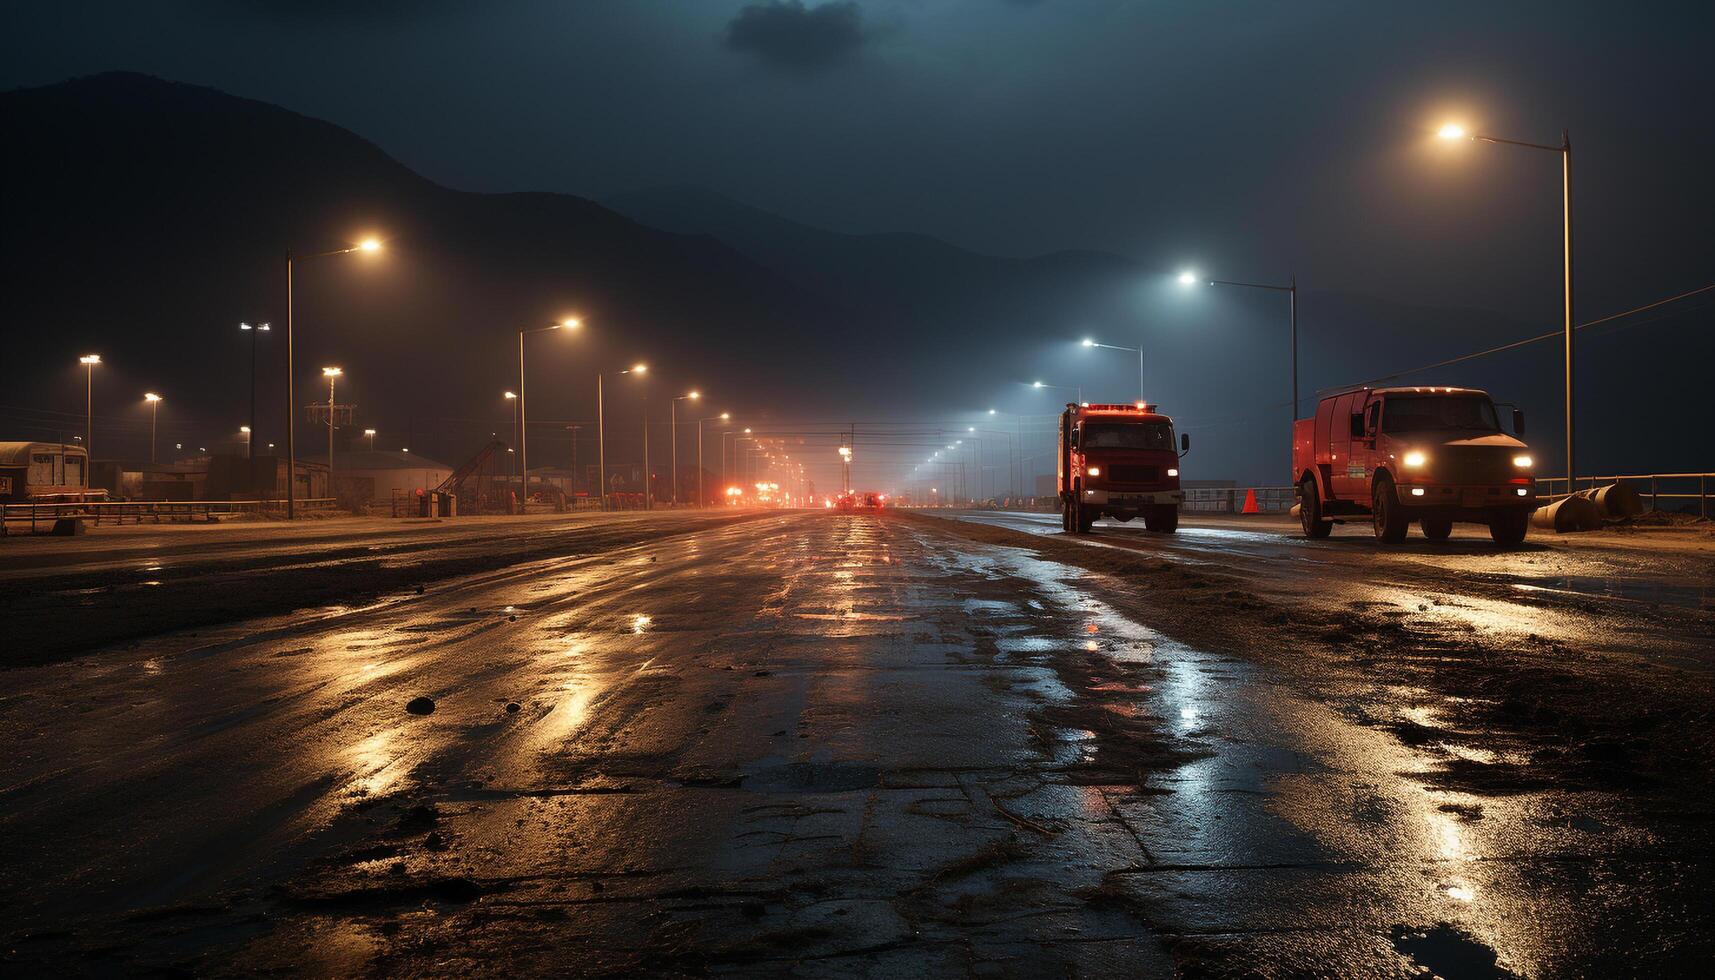 AI generated Bright headlights illuminate the dark snowy night on the highway generated by AI photo